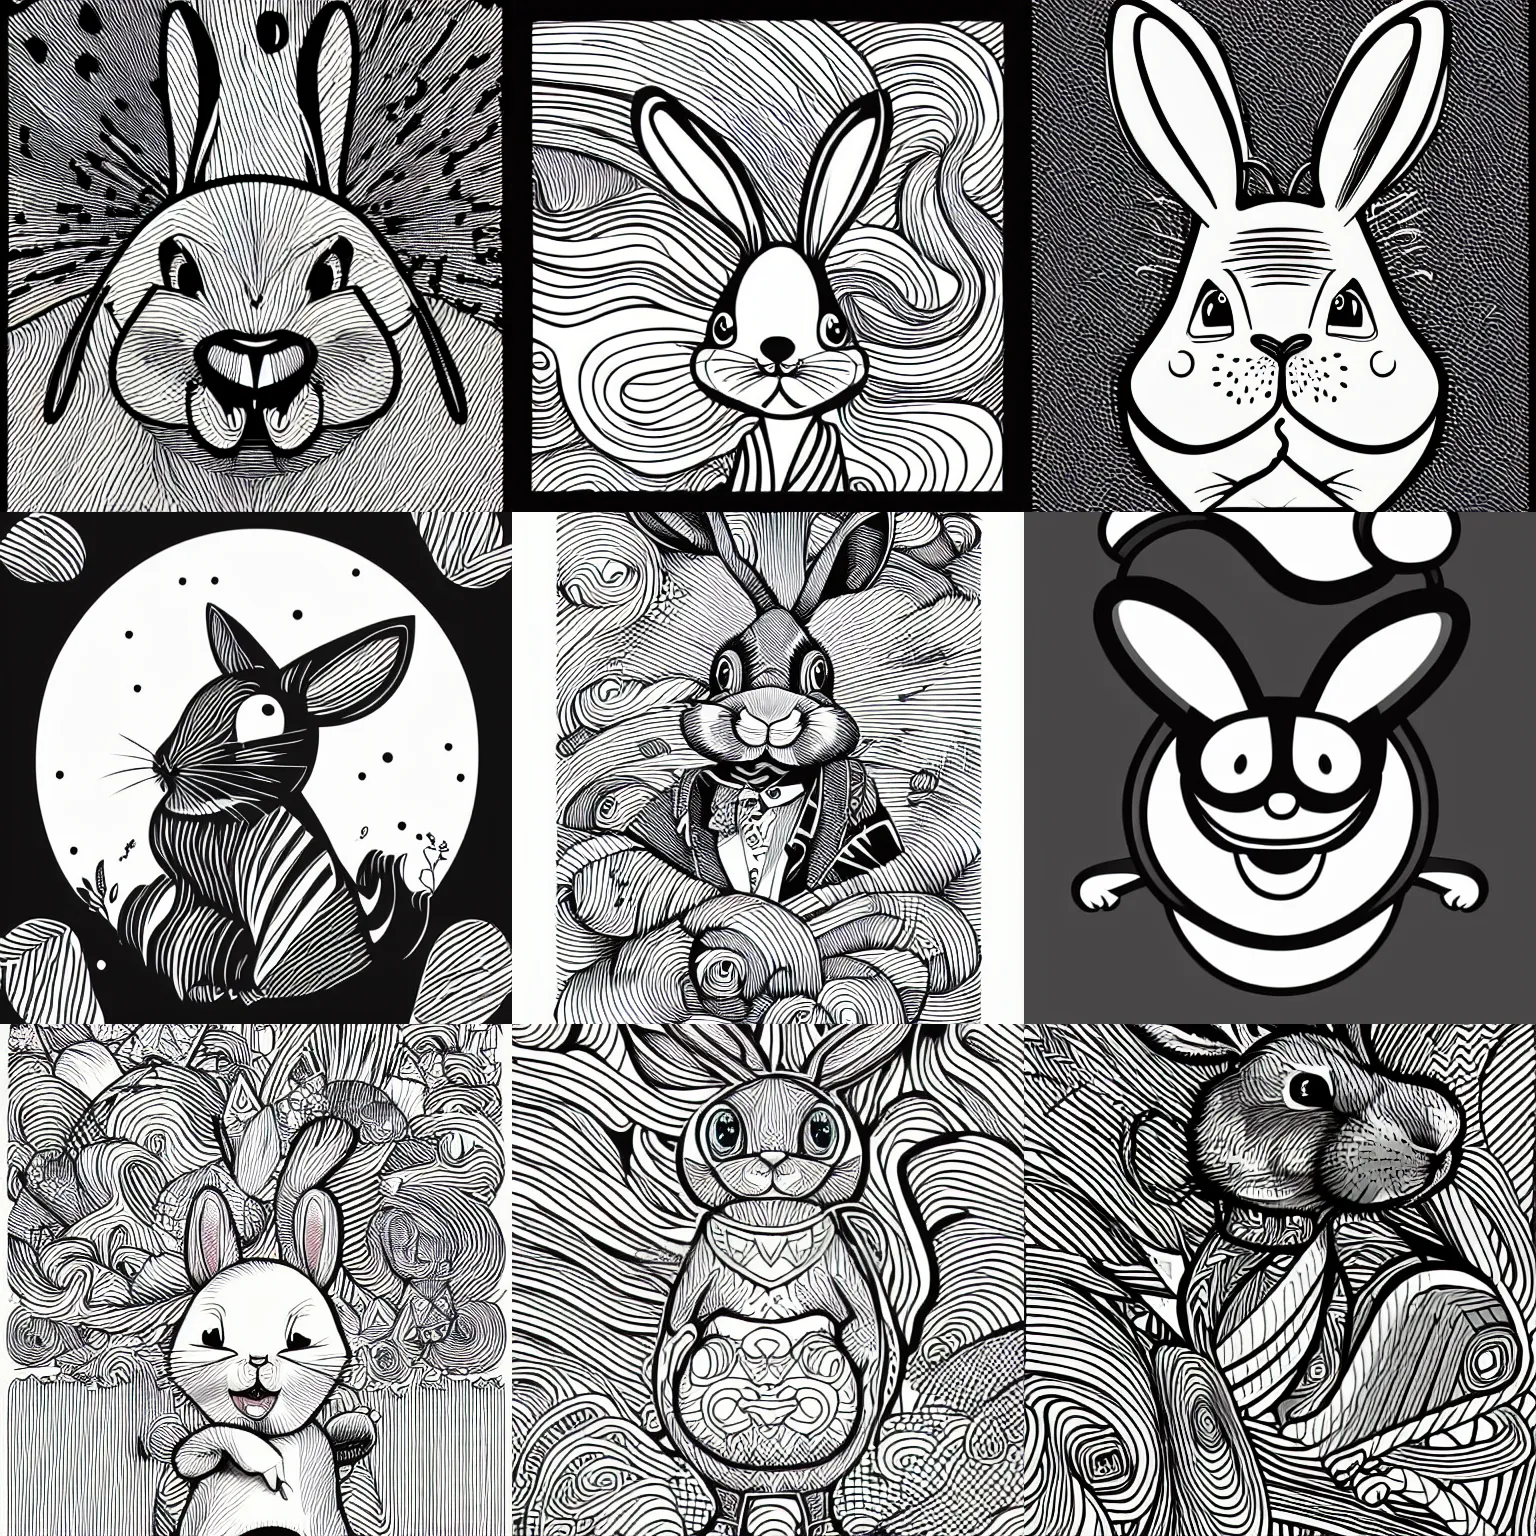 Prompt: line art crazy rabbit vector illustration, bold lines, waves, svg, mcbess, behance, devianart, artstation, dribble, creary, ello, cgsociety, drawcrowd, pixiv, concept art world, our art corner, newgrounds, doodle addicts, penup